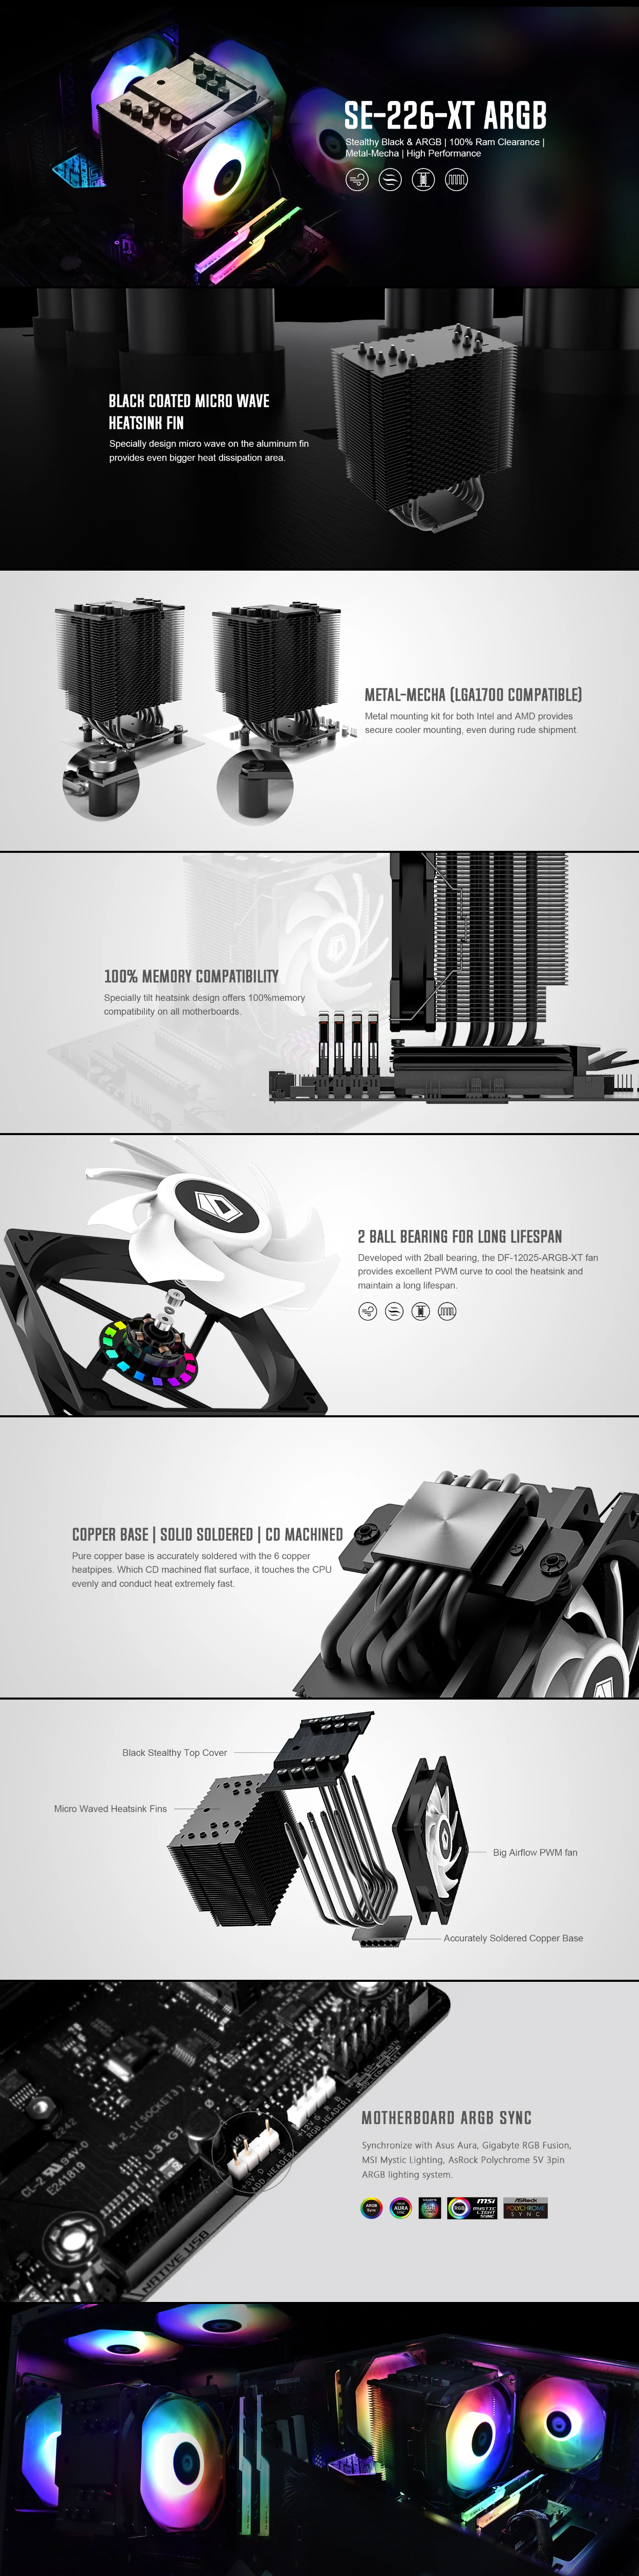 ID Cooling SE-226-XT ARGB CPU Cooler - Black